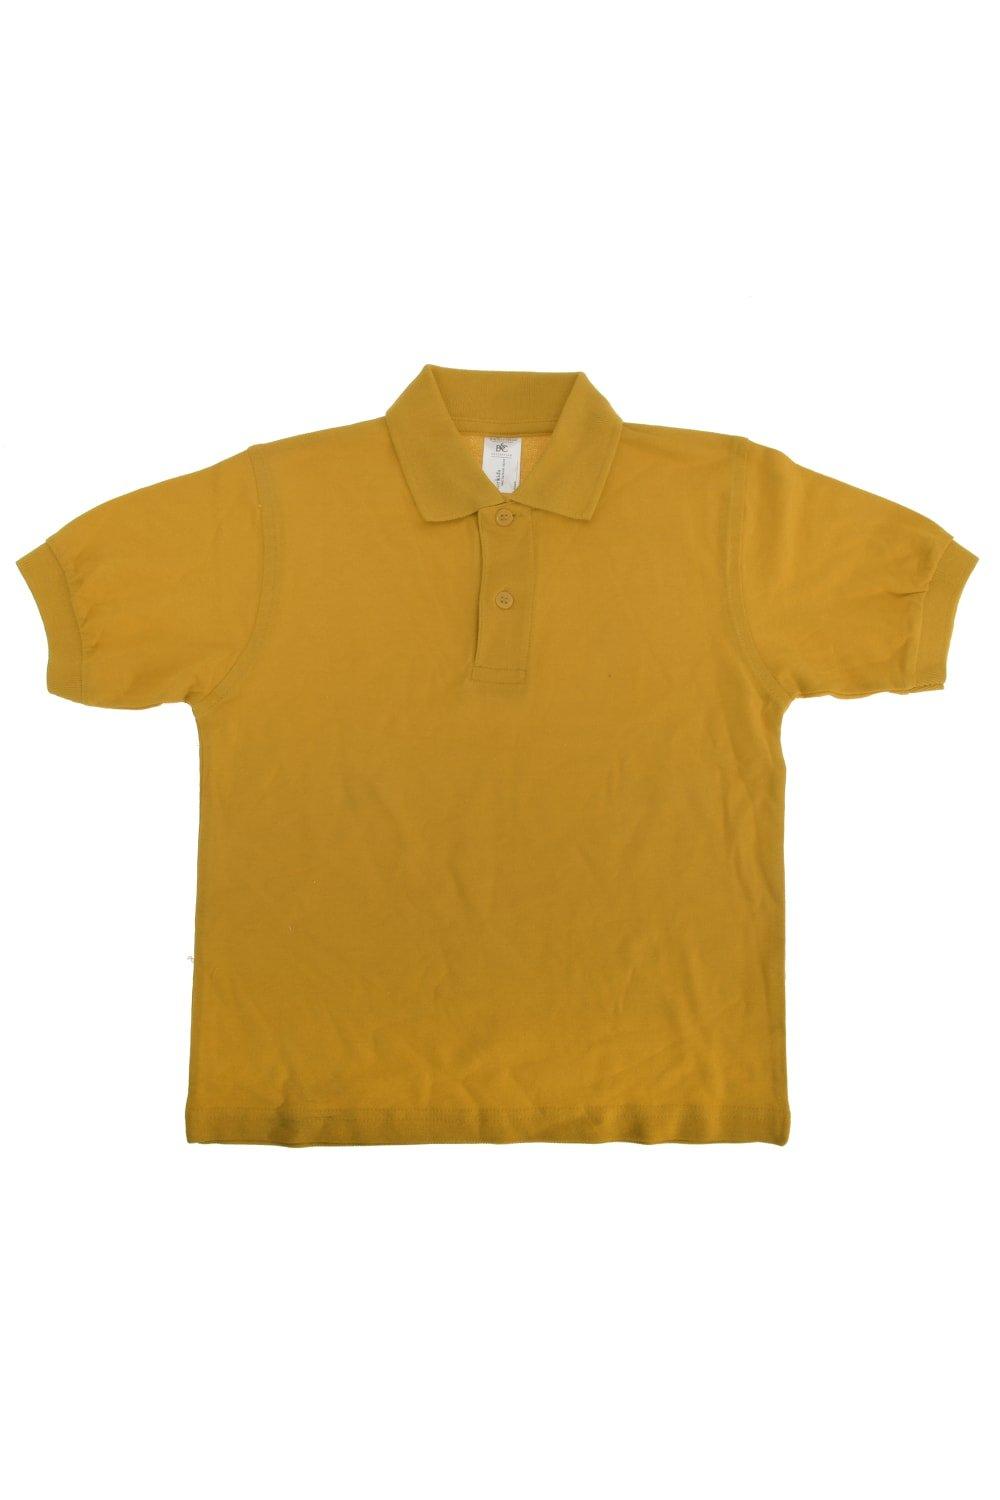 Рубашка-поло Safran B&C, золото